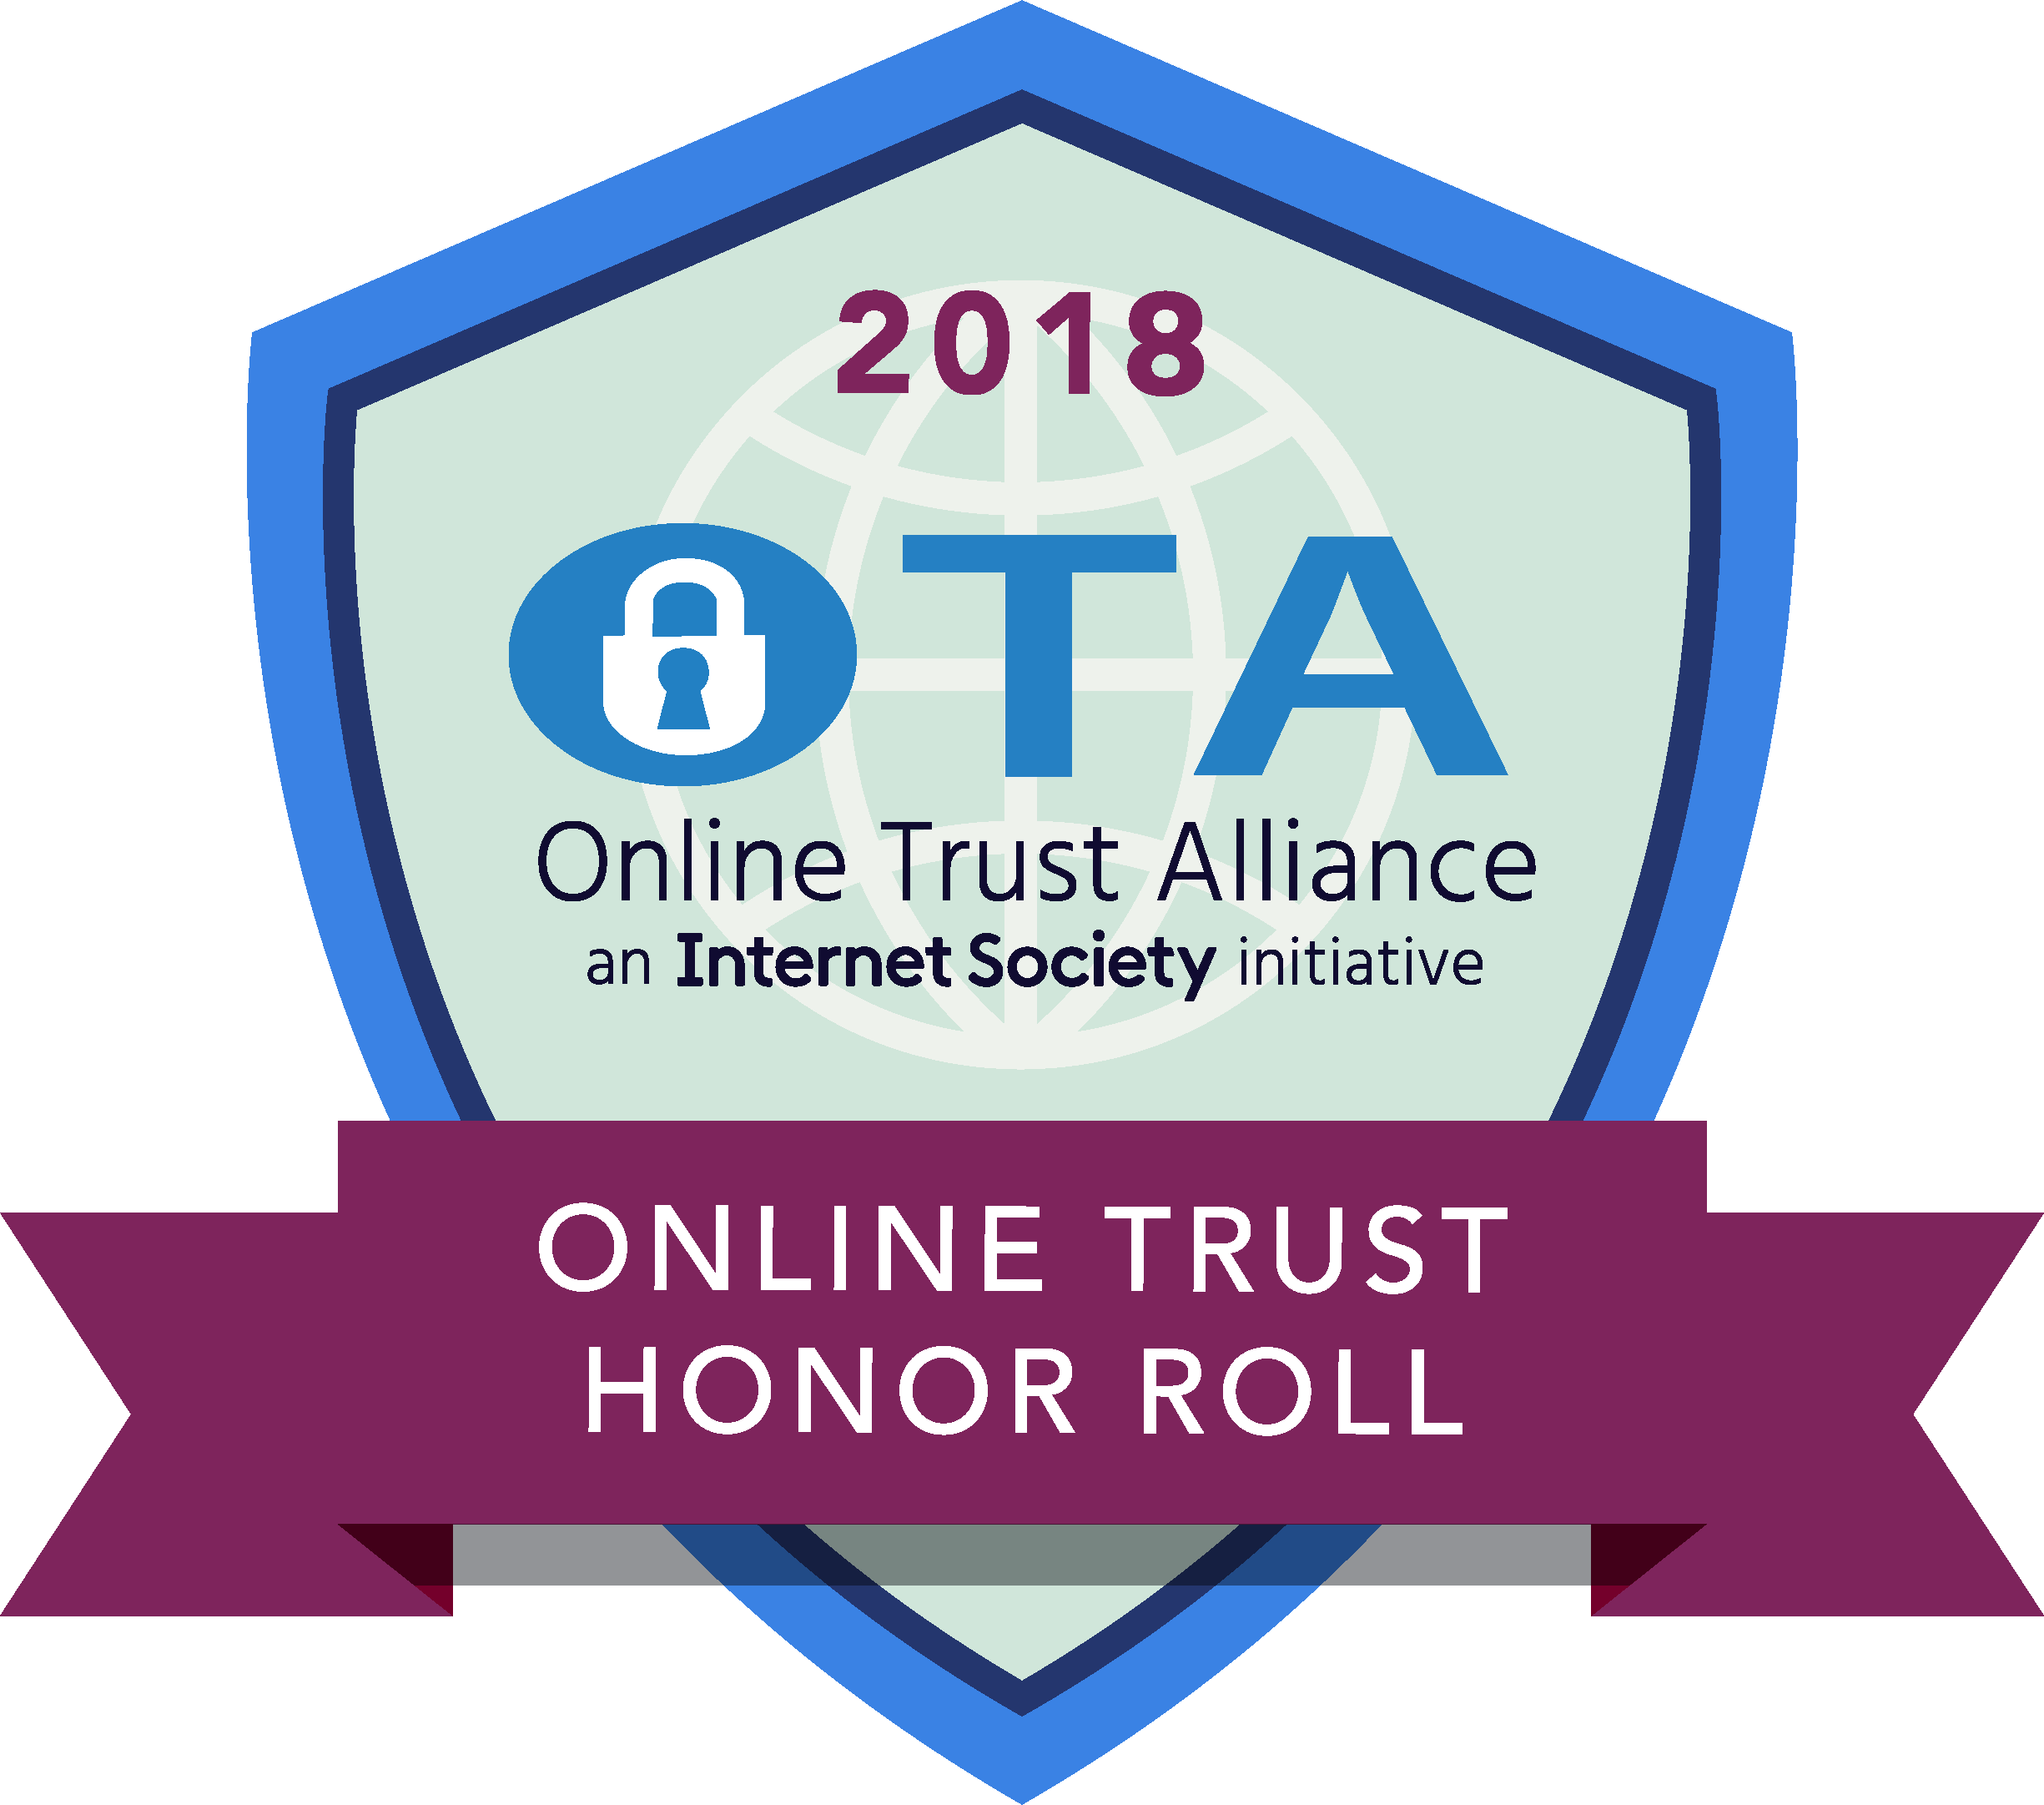 Online Trust Alliance (OTA) Society